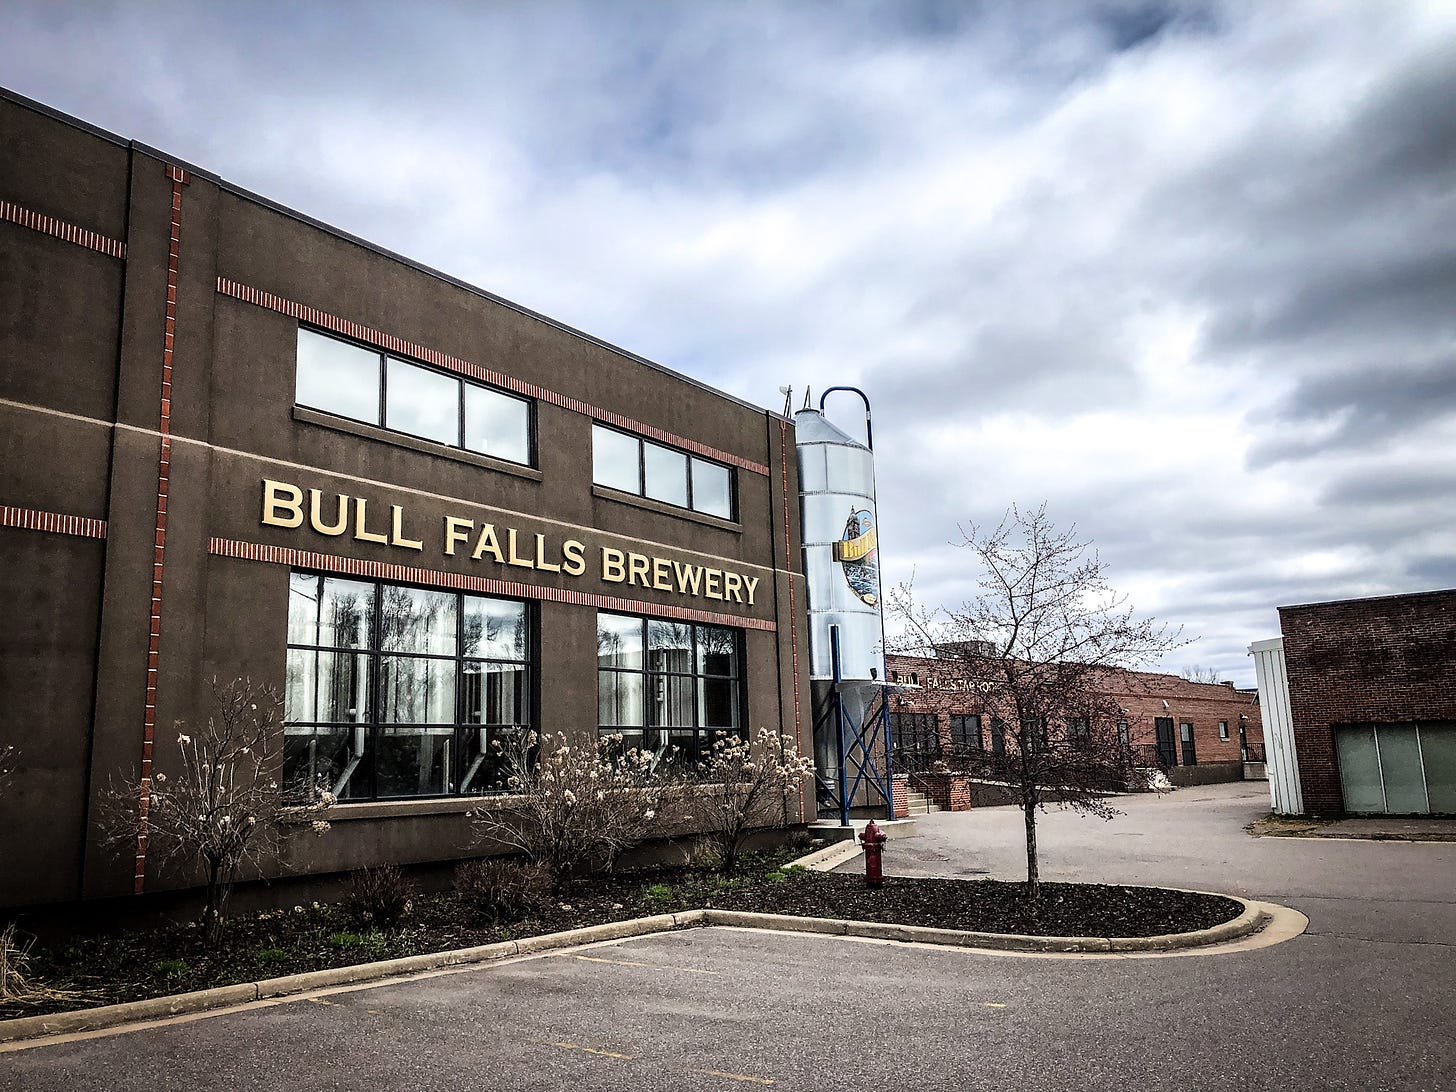 Bull Falls Brewery sale